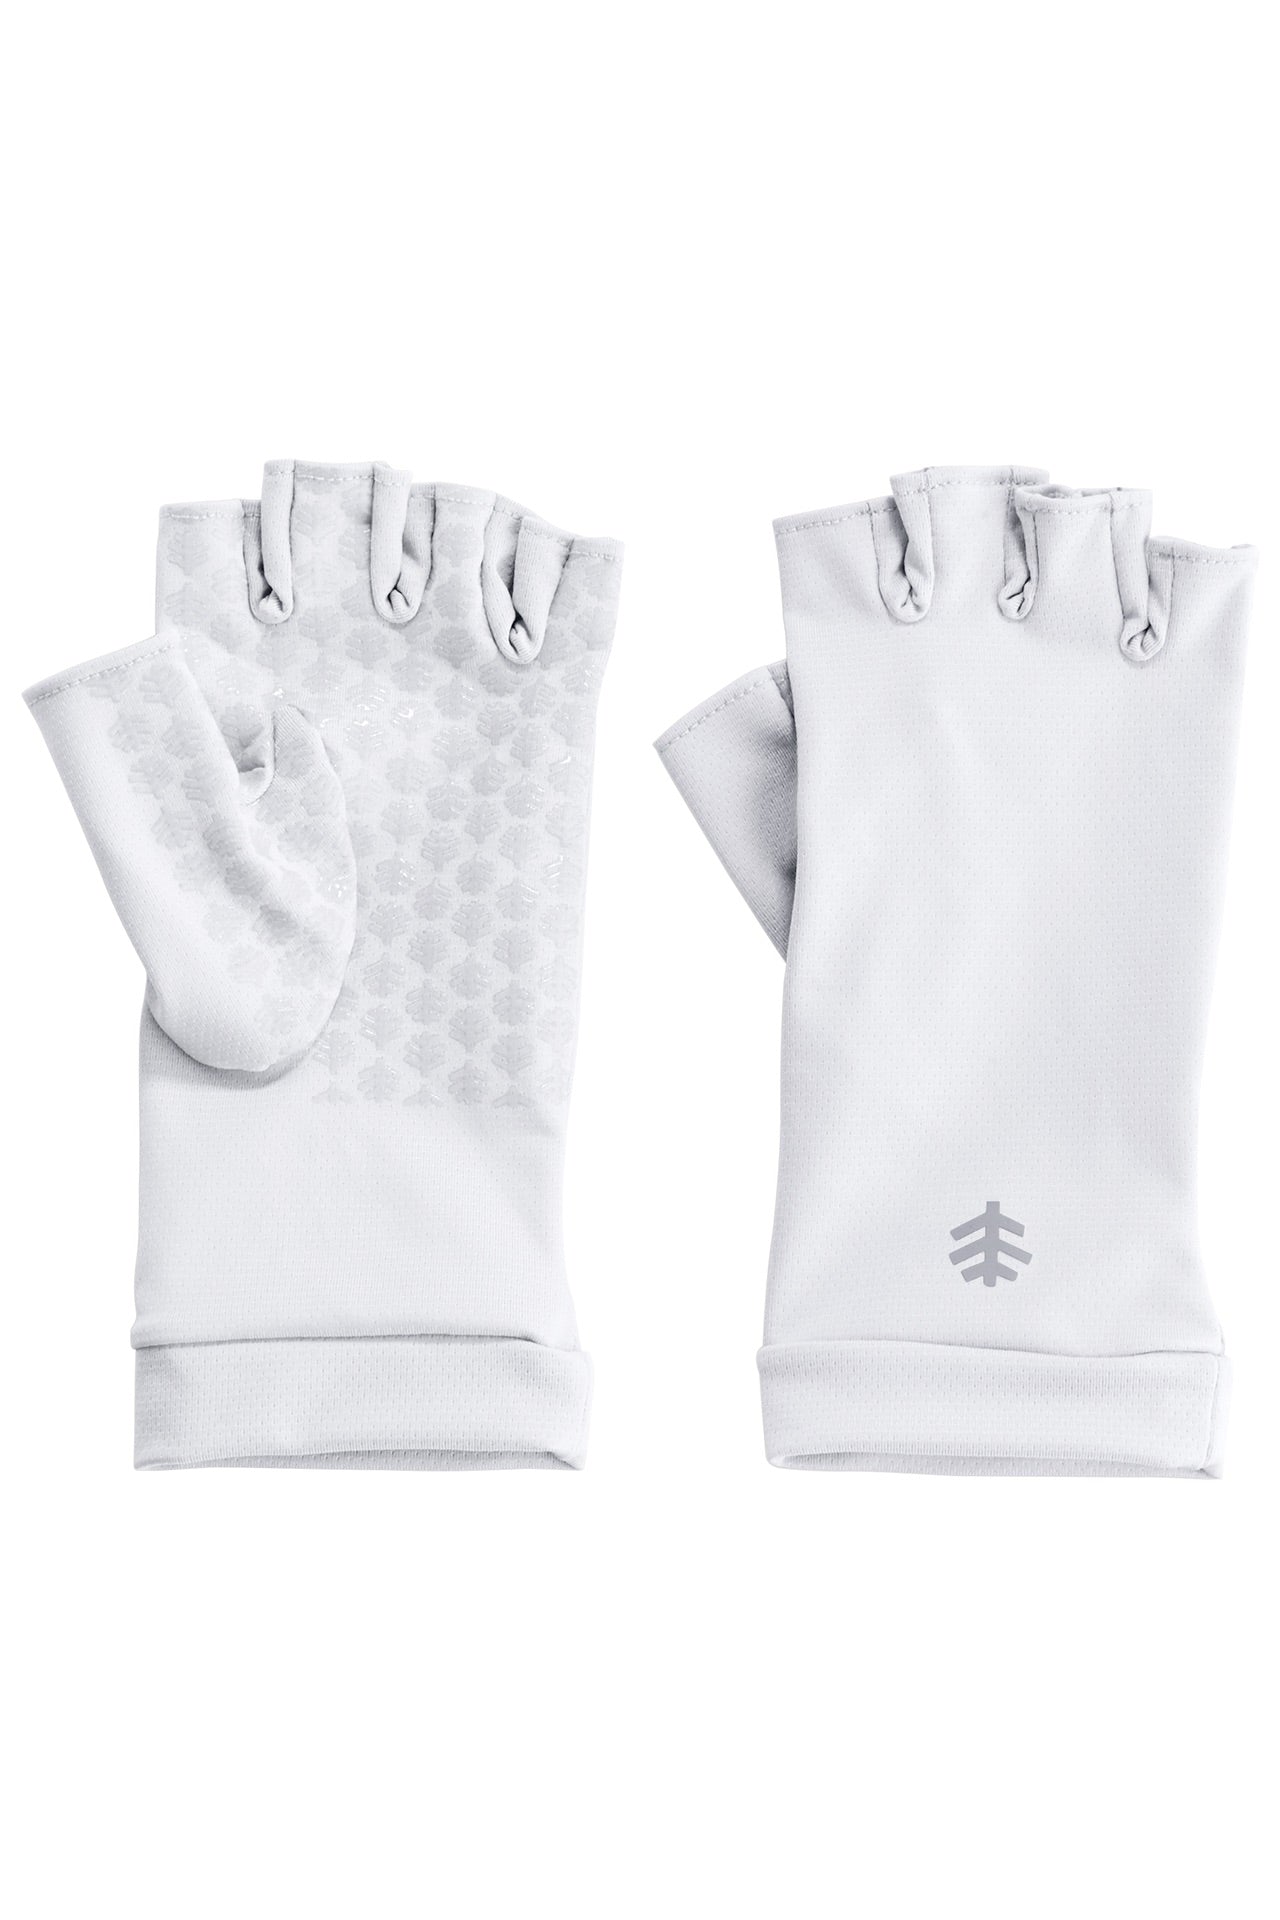 Best Deal for KOOFIN GEAR Fishing Gloves Sun Protection Fingerless